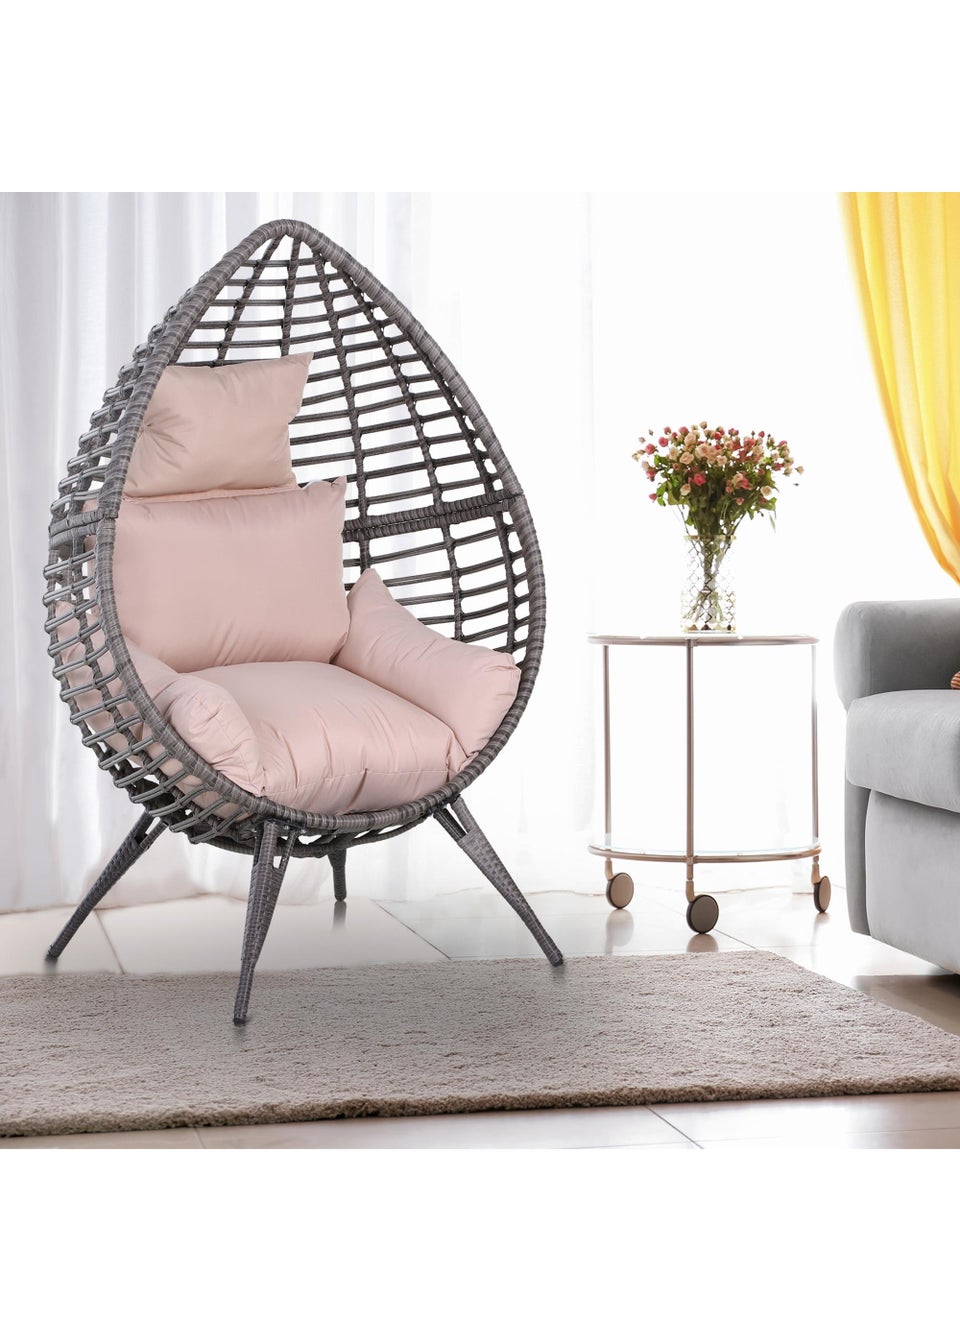 Outsunny Rattan Teardrop Garden Chair (101cm x 89cm x 156cm)